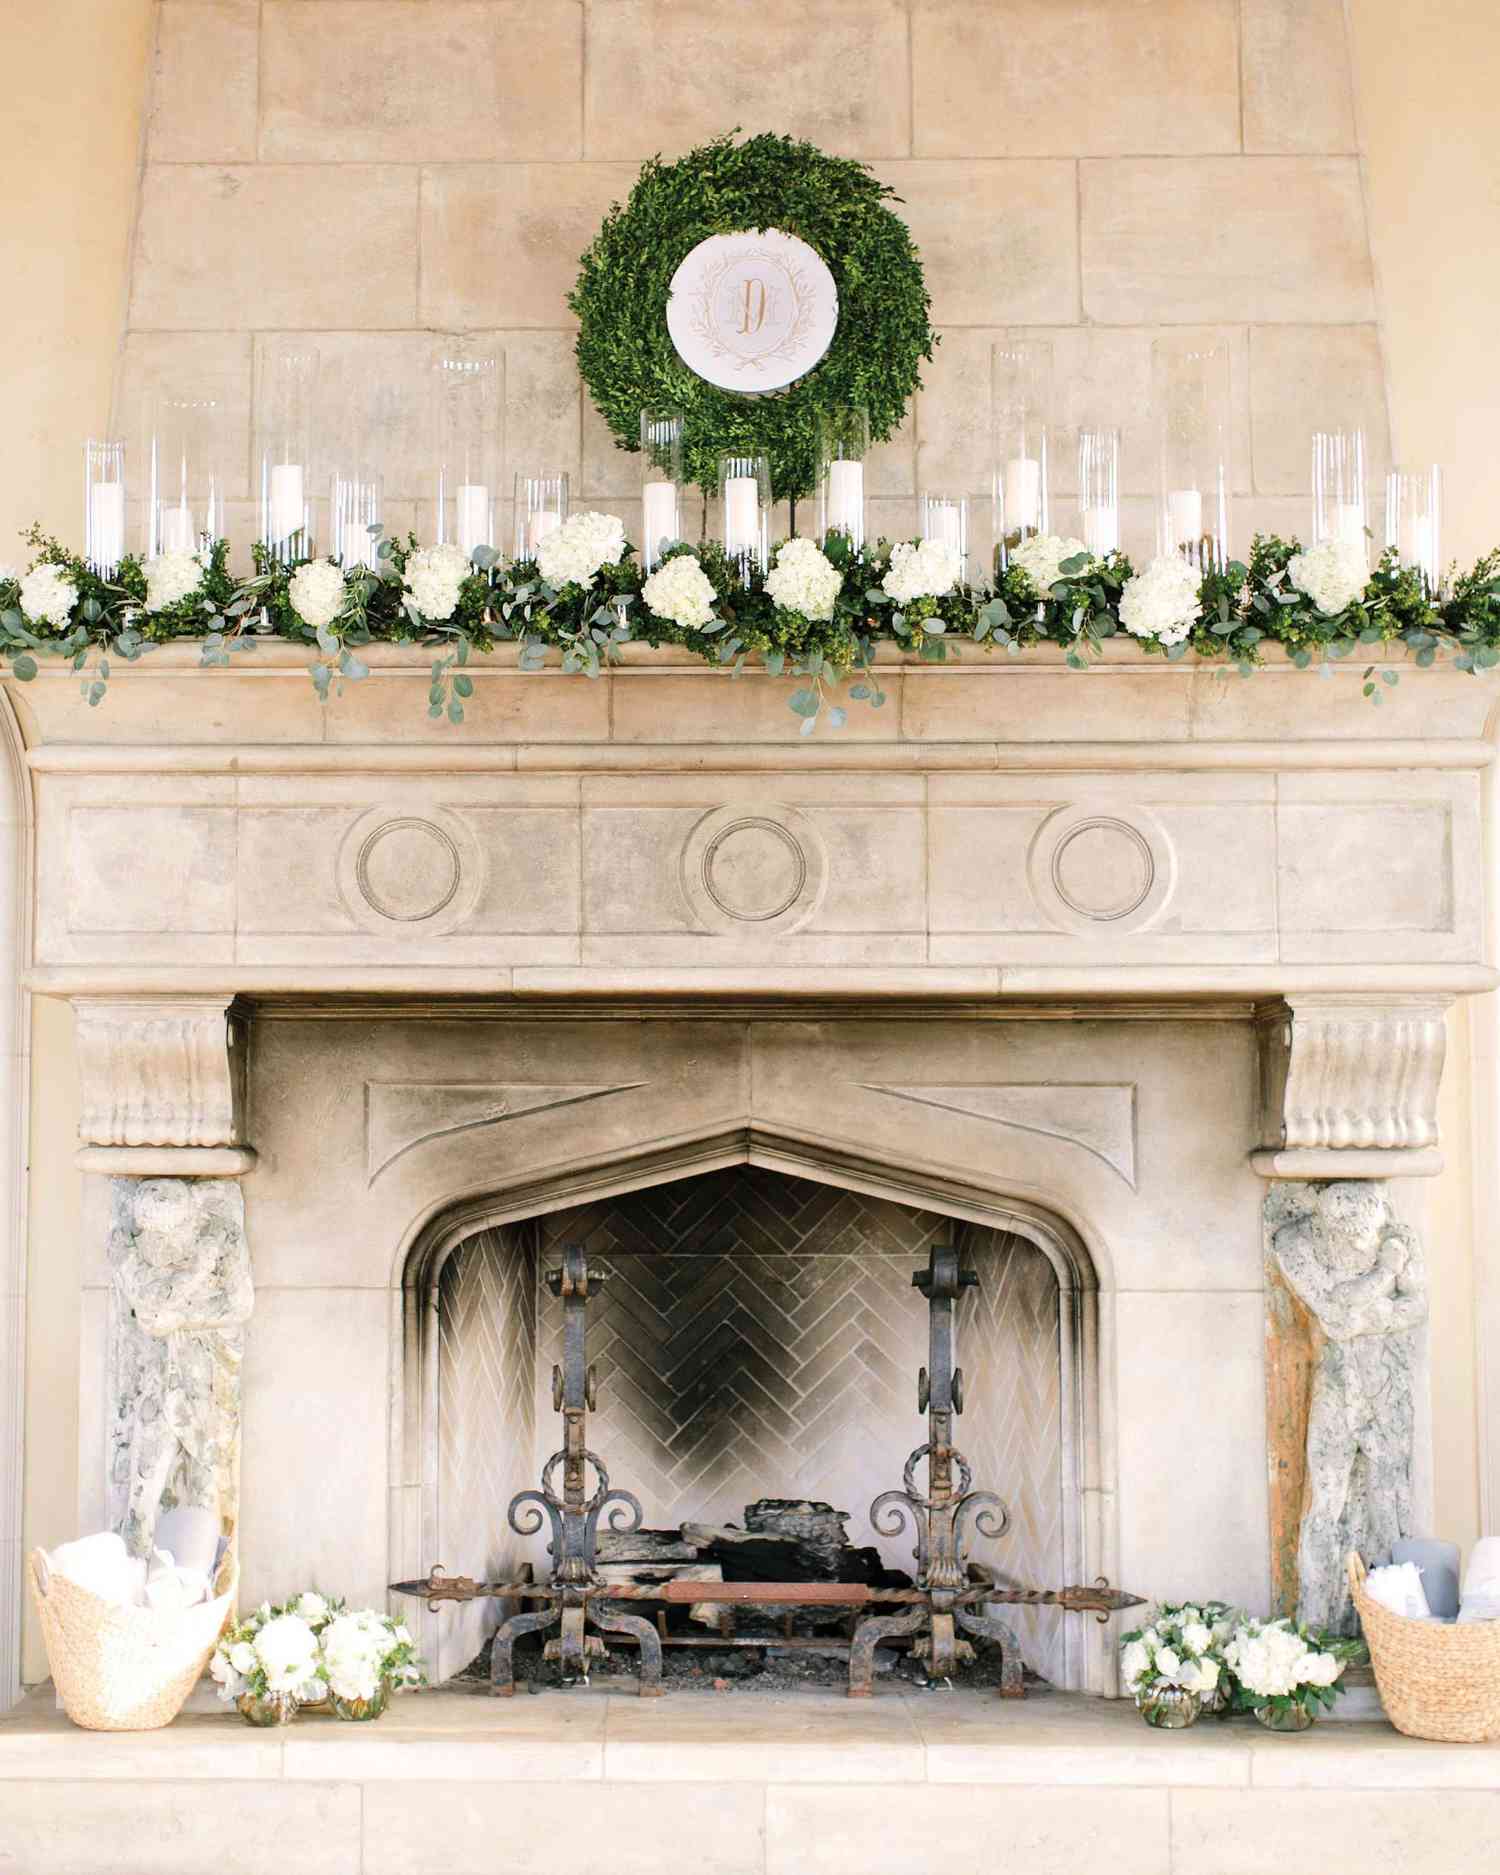 A Pretty Fireplace